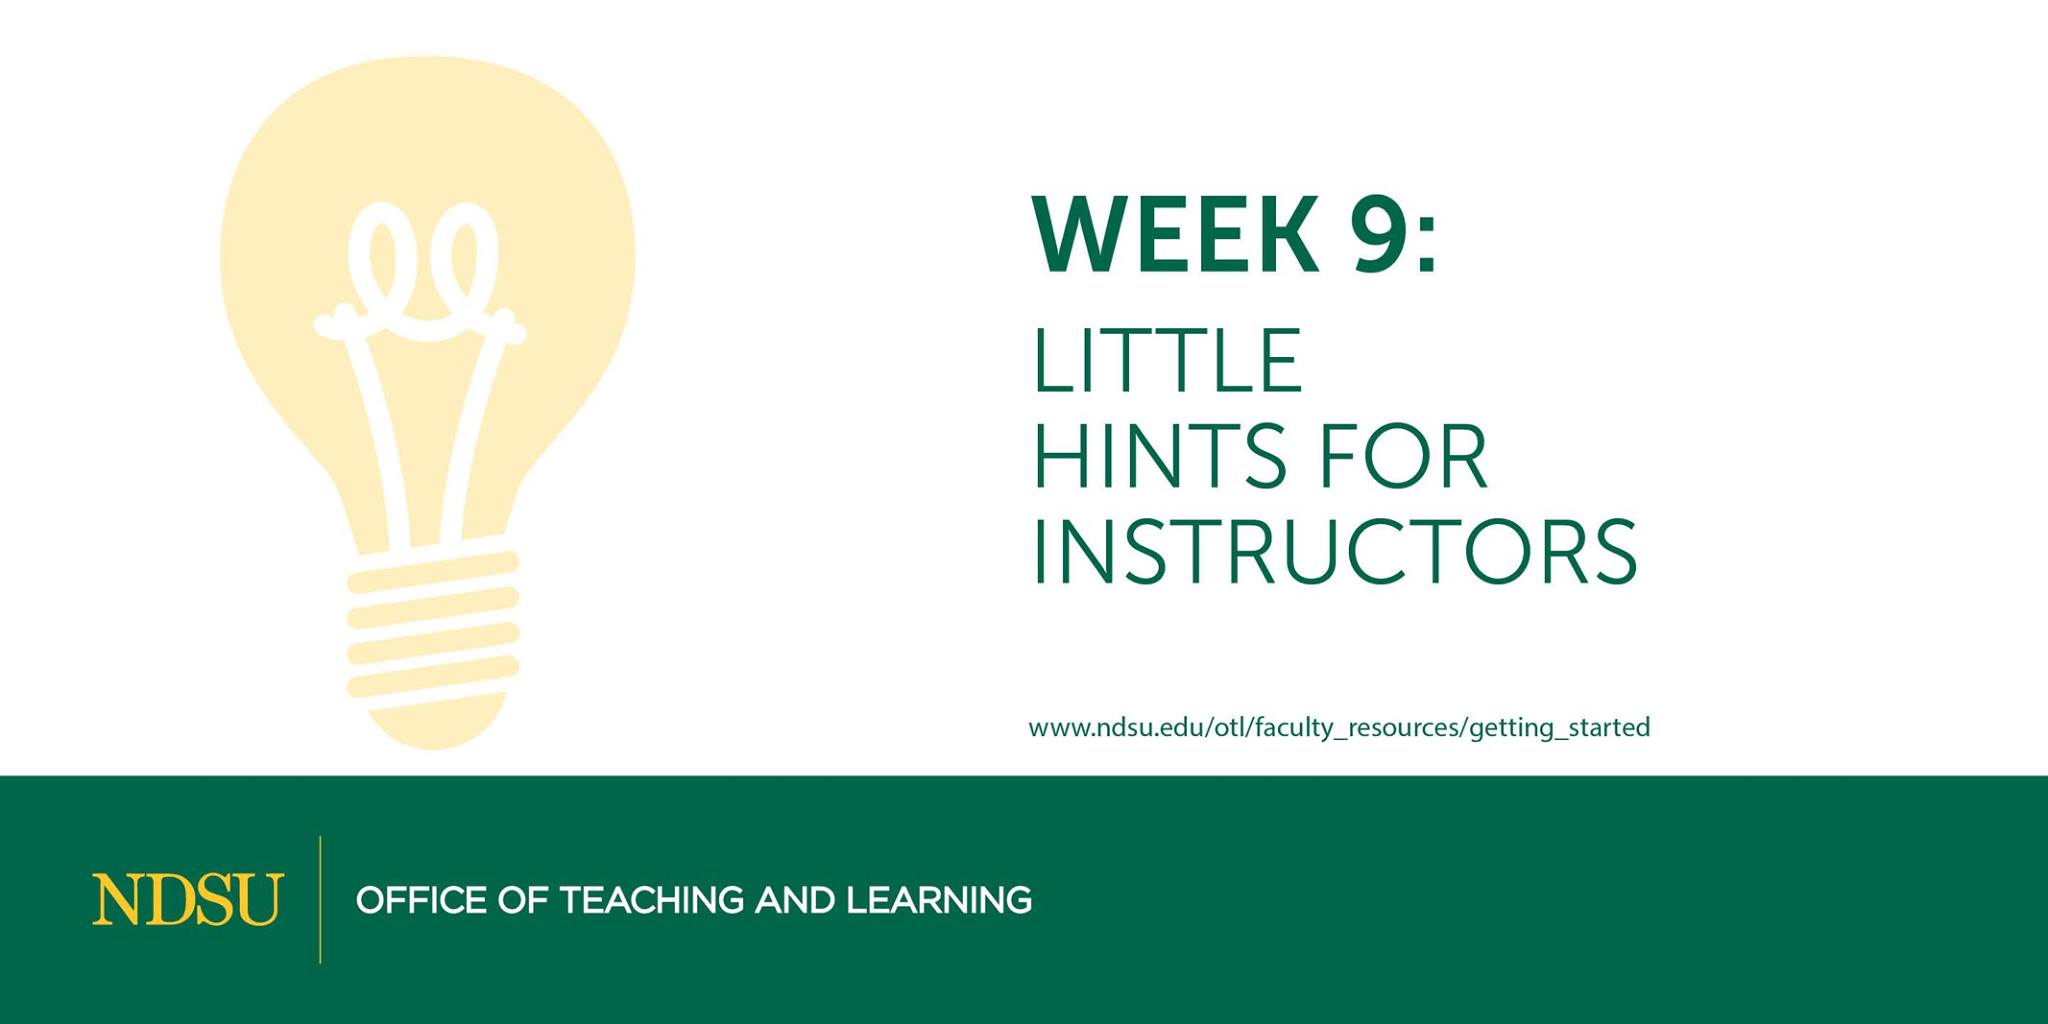 Week 9 Little Hints for Instructors